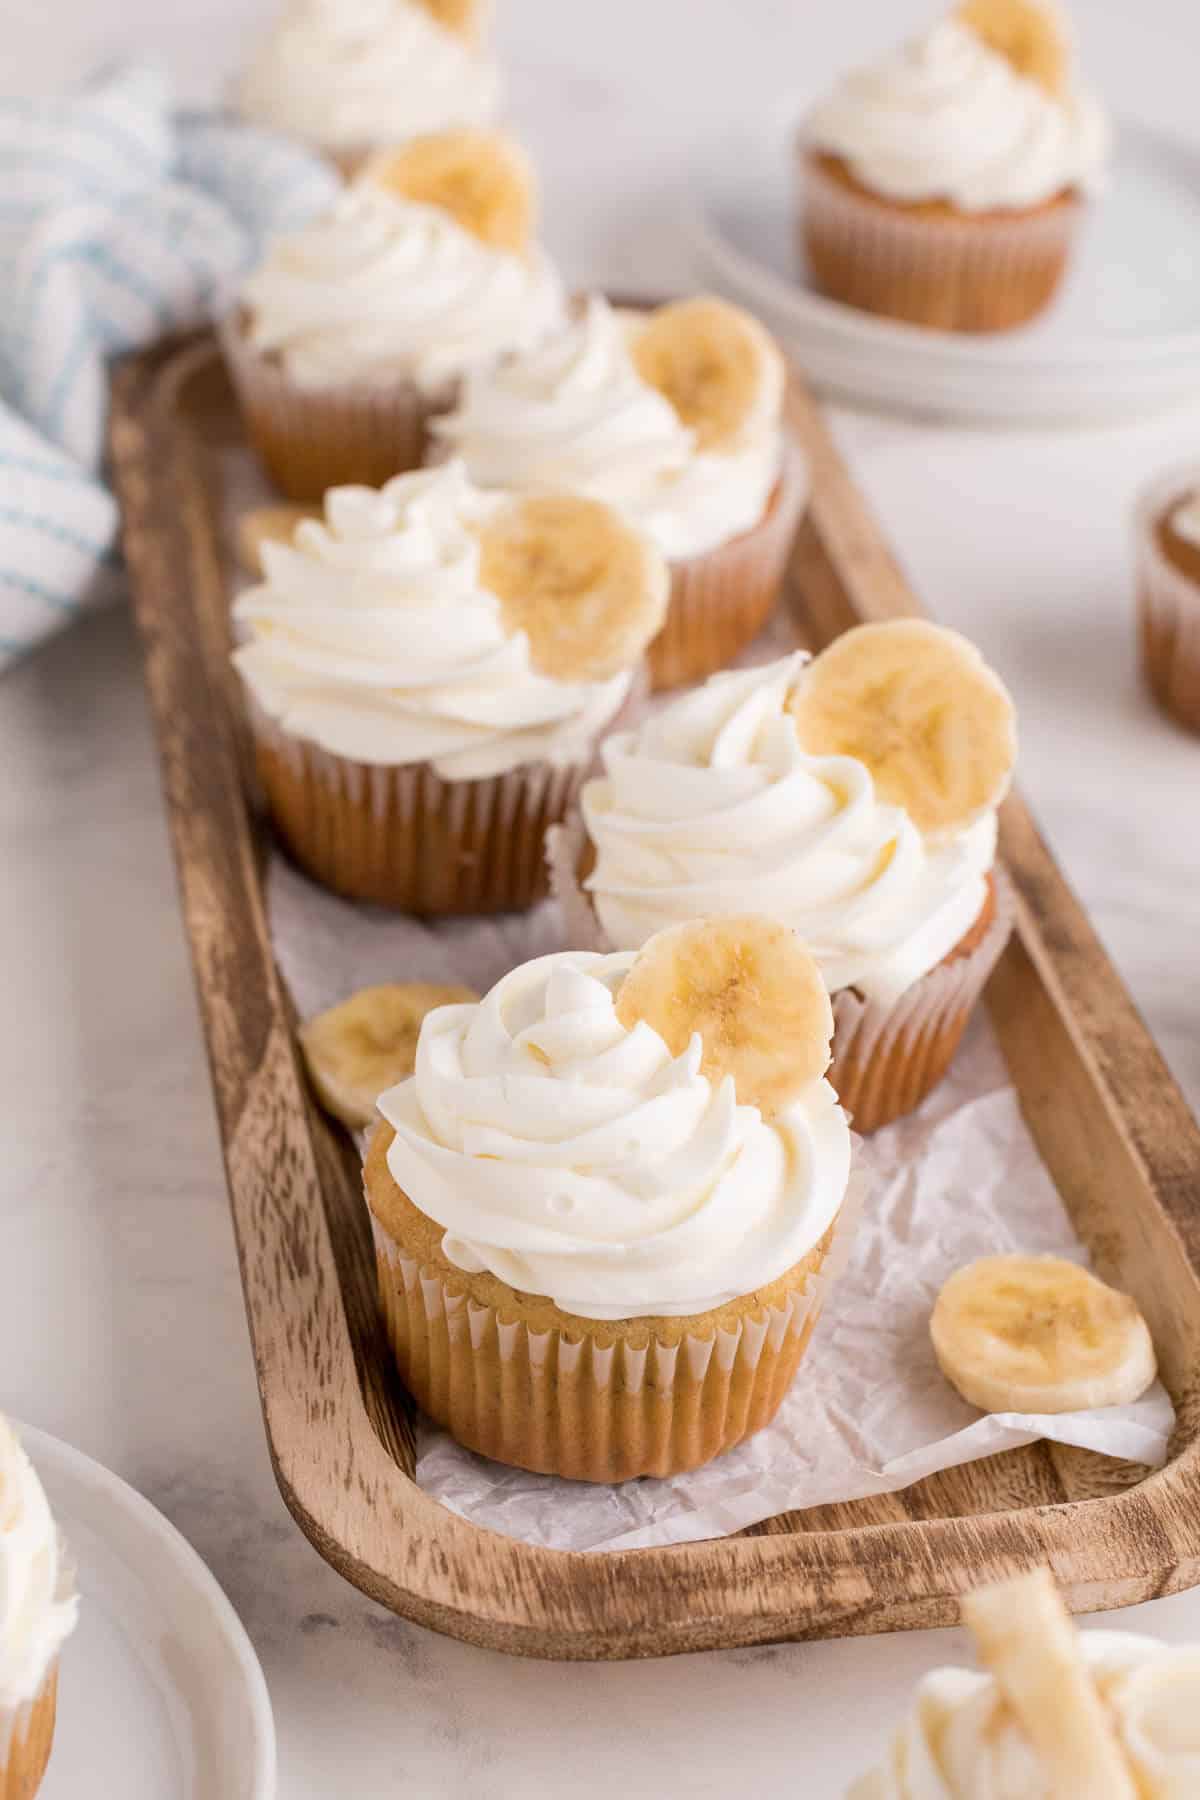 Banana cupcakes on a platter.